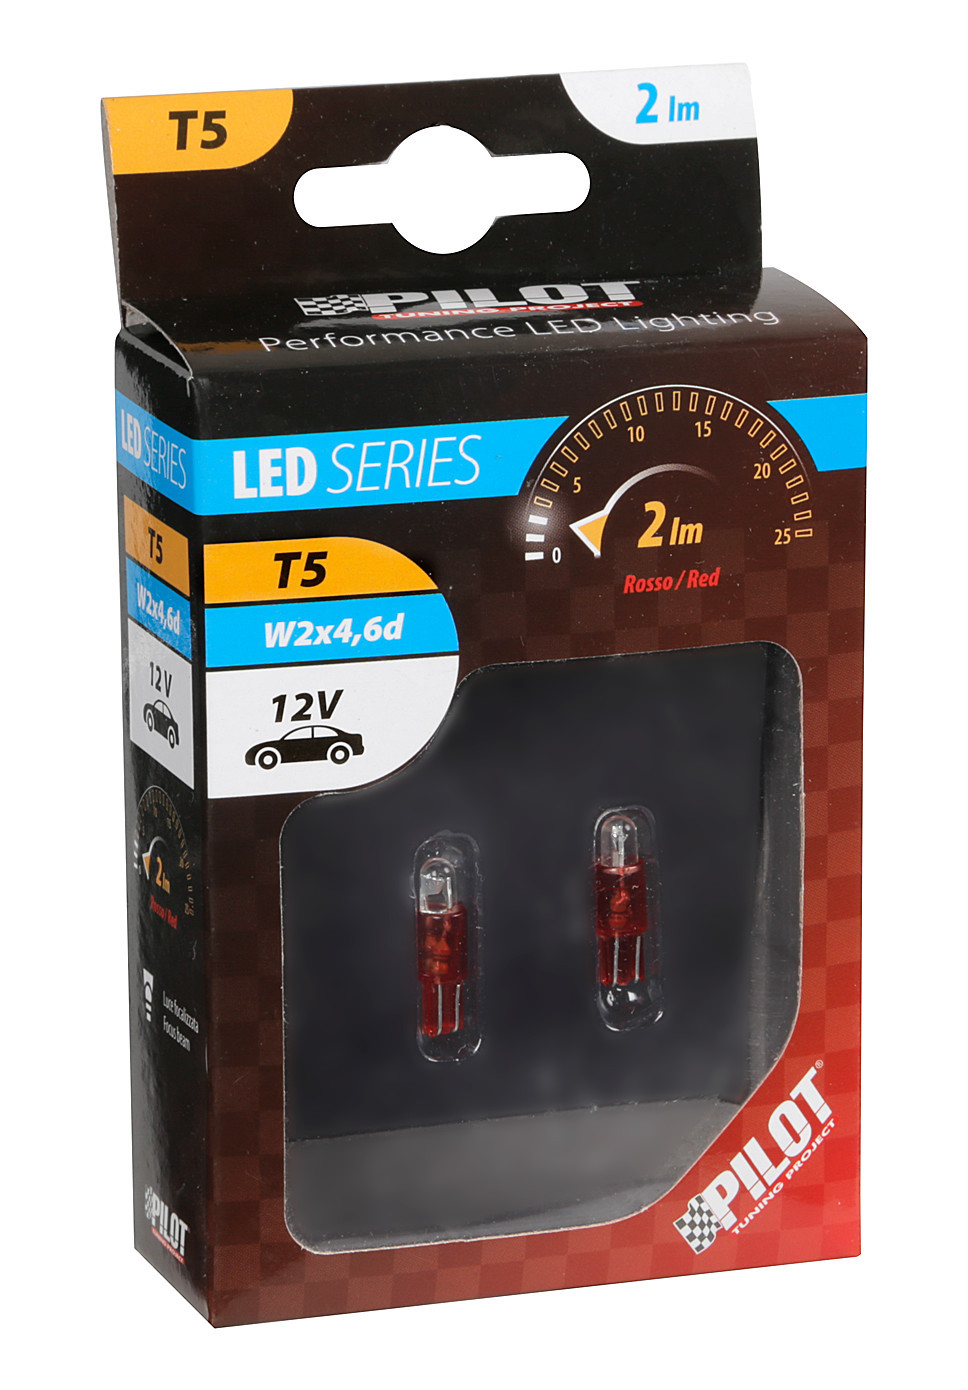 12V Micro lamp wedge base 1 Led - (T5) - W2x4,6d - 2 pcs - Red thumb